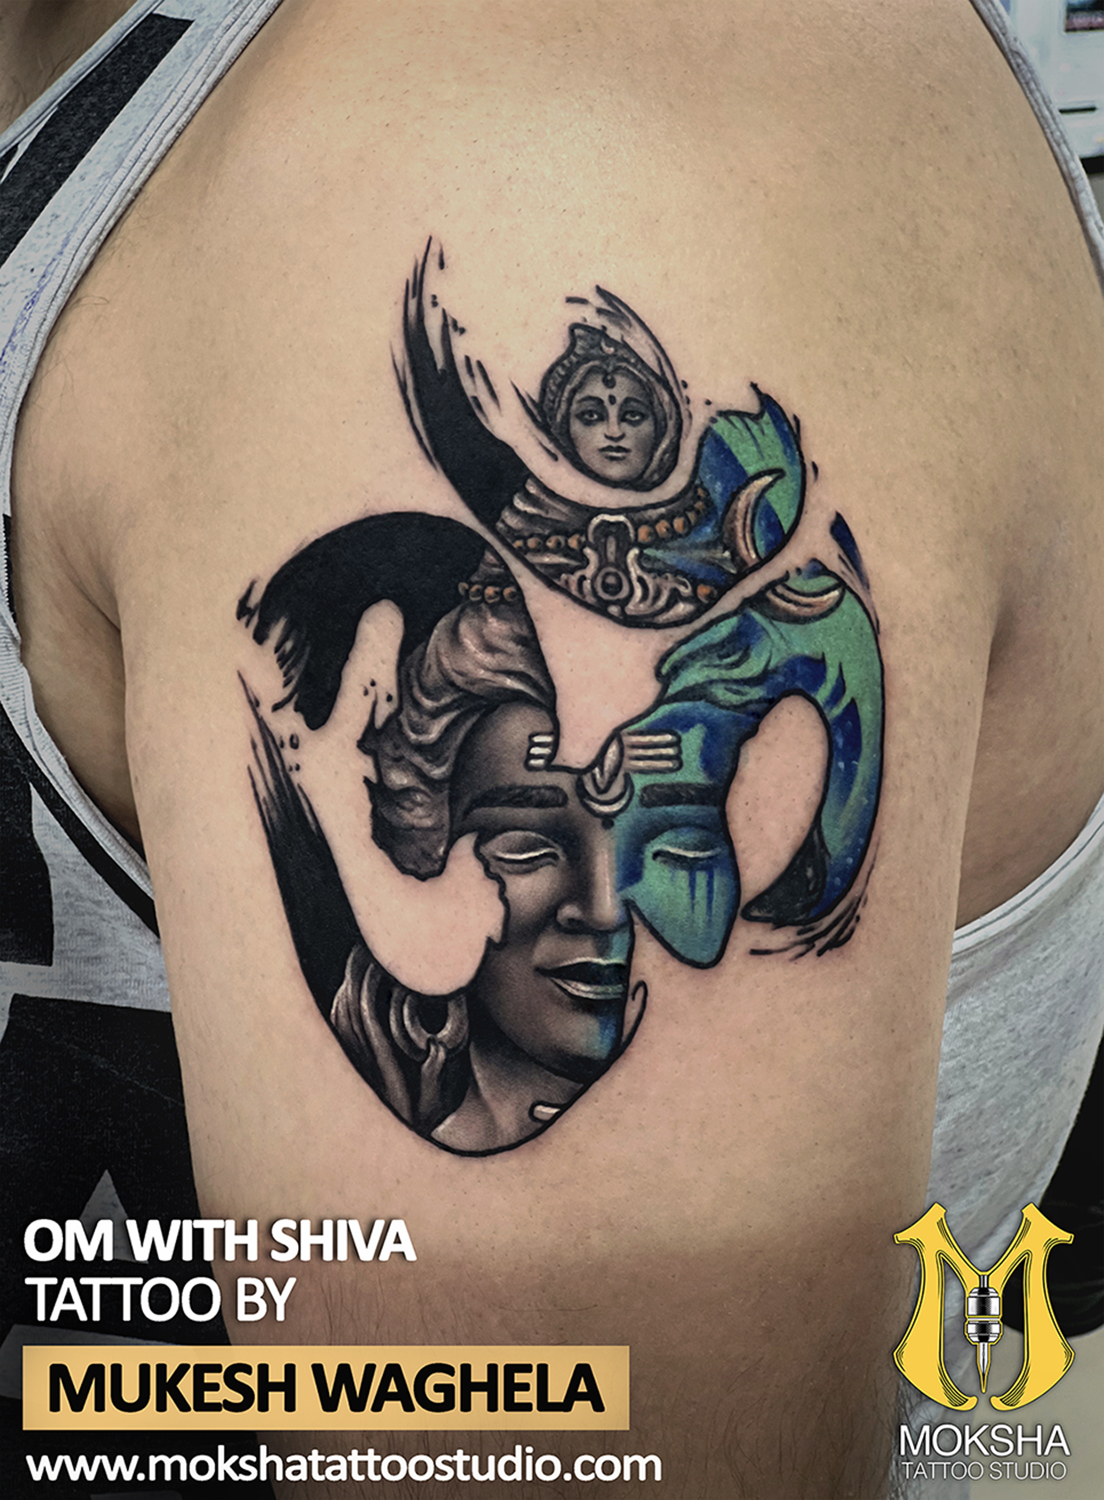 Top 10 Lord Shiva and Mahadev Tattoos  Iron Buzz Tattoos